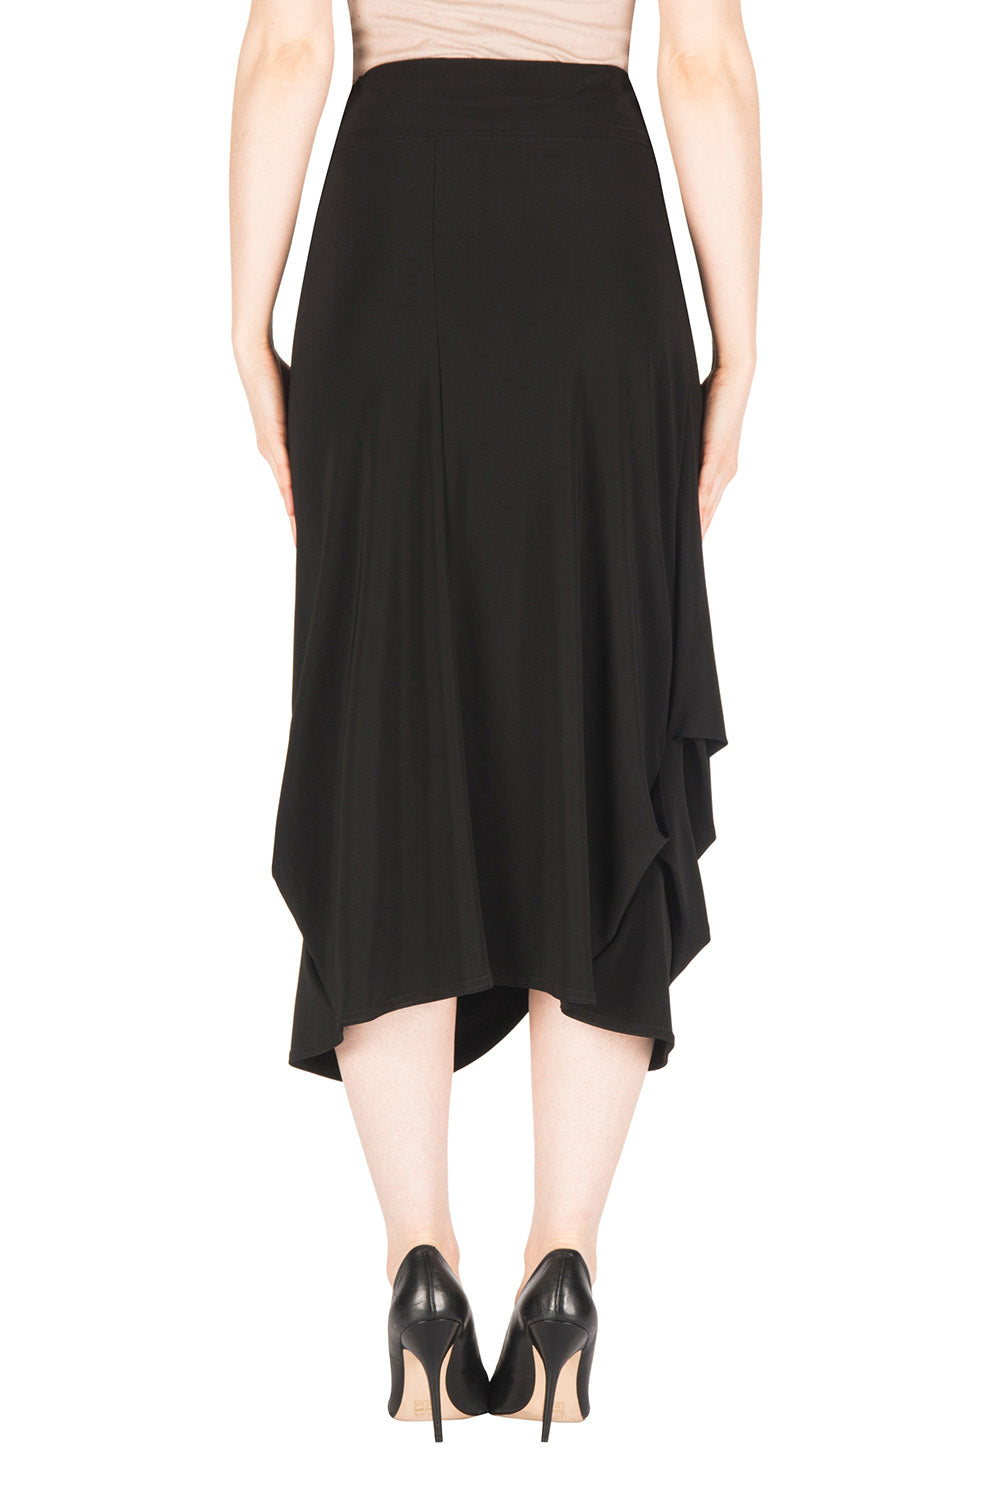 Joseph Ribkoff Black Skirt Style 183241